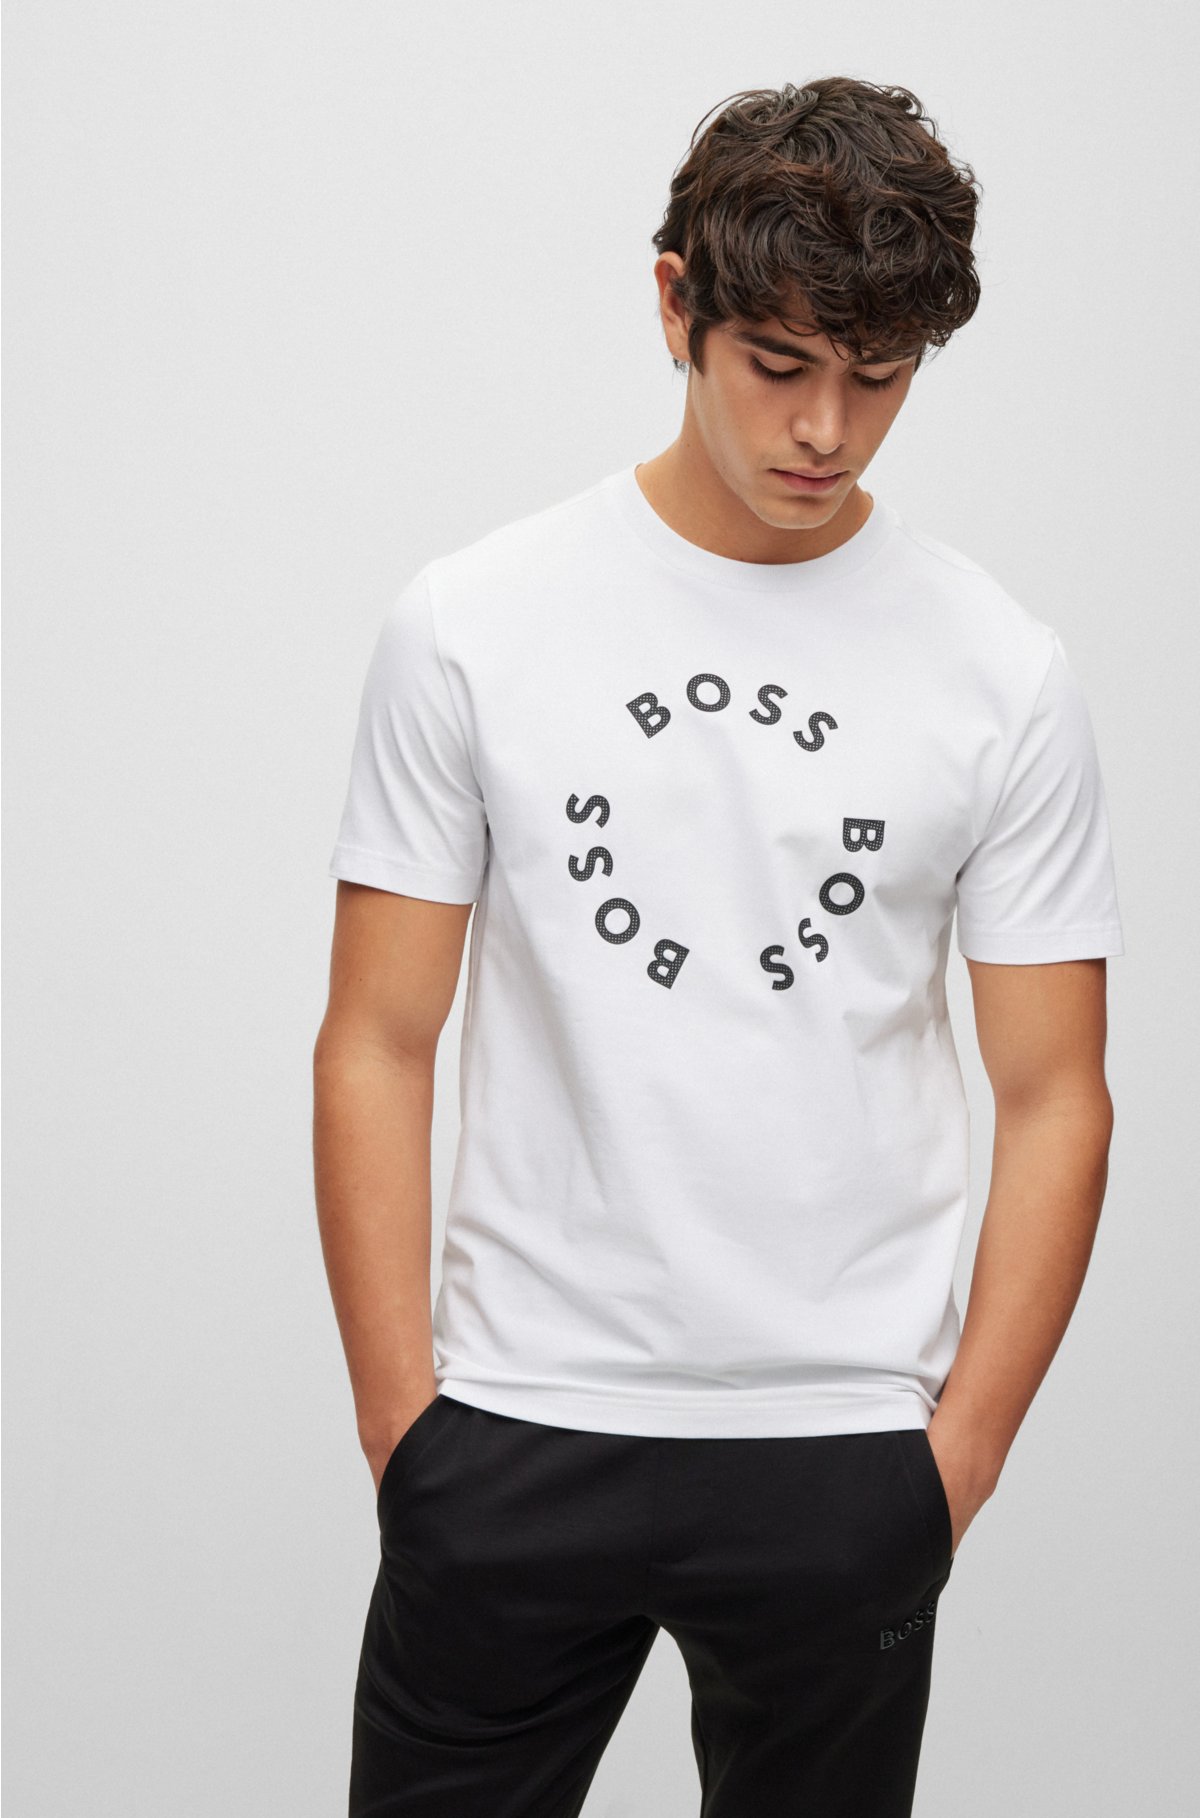 Stretch-cotton circle prints - BOSS with logo T-shirt